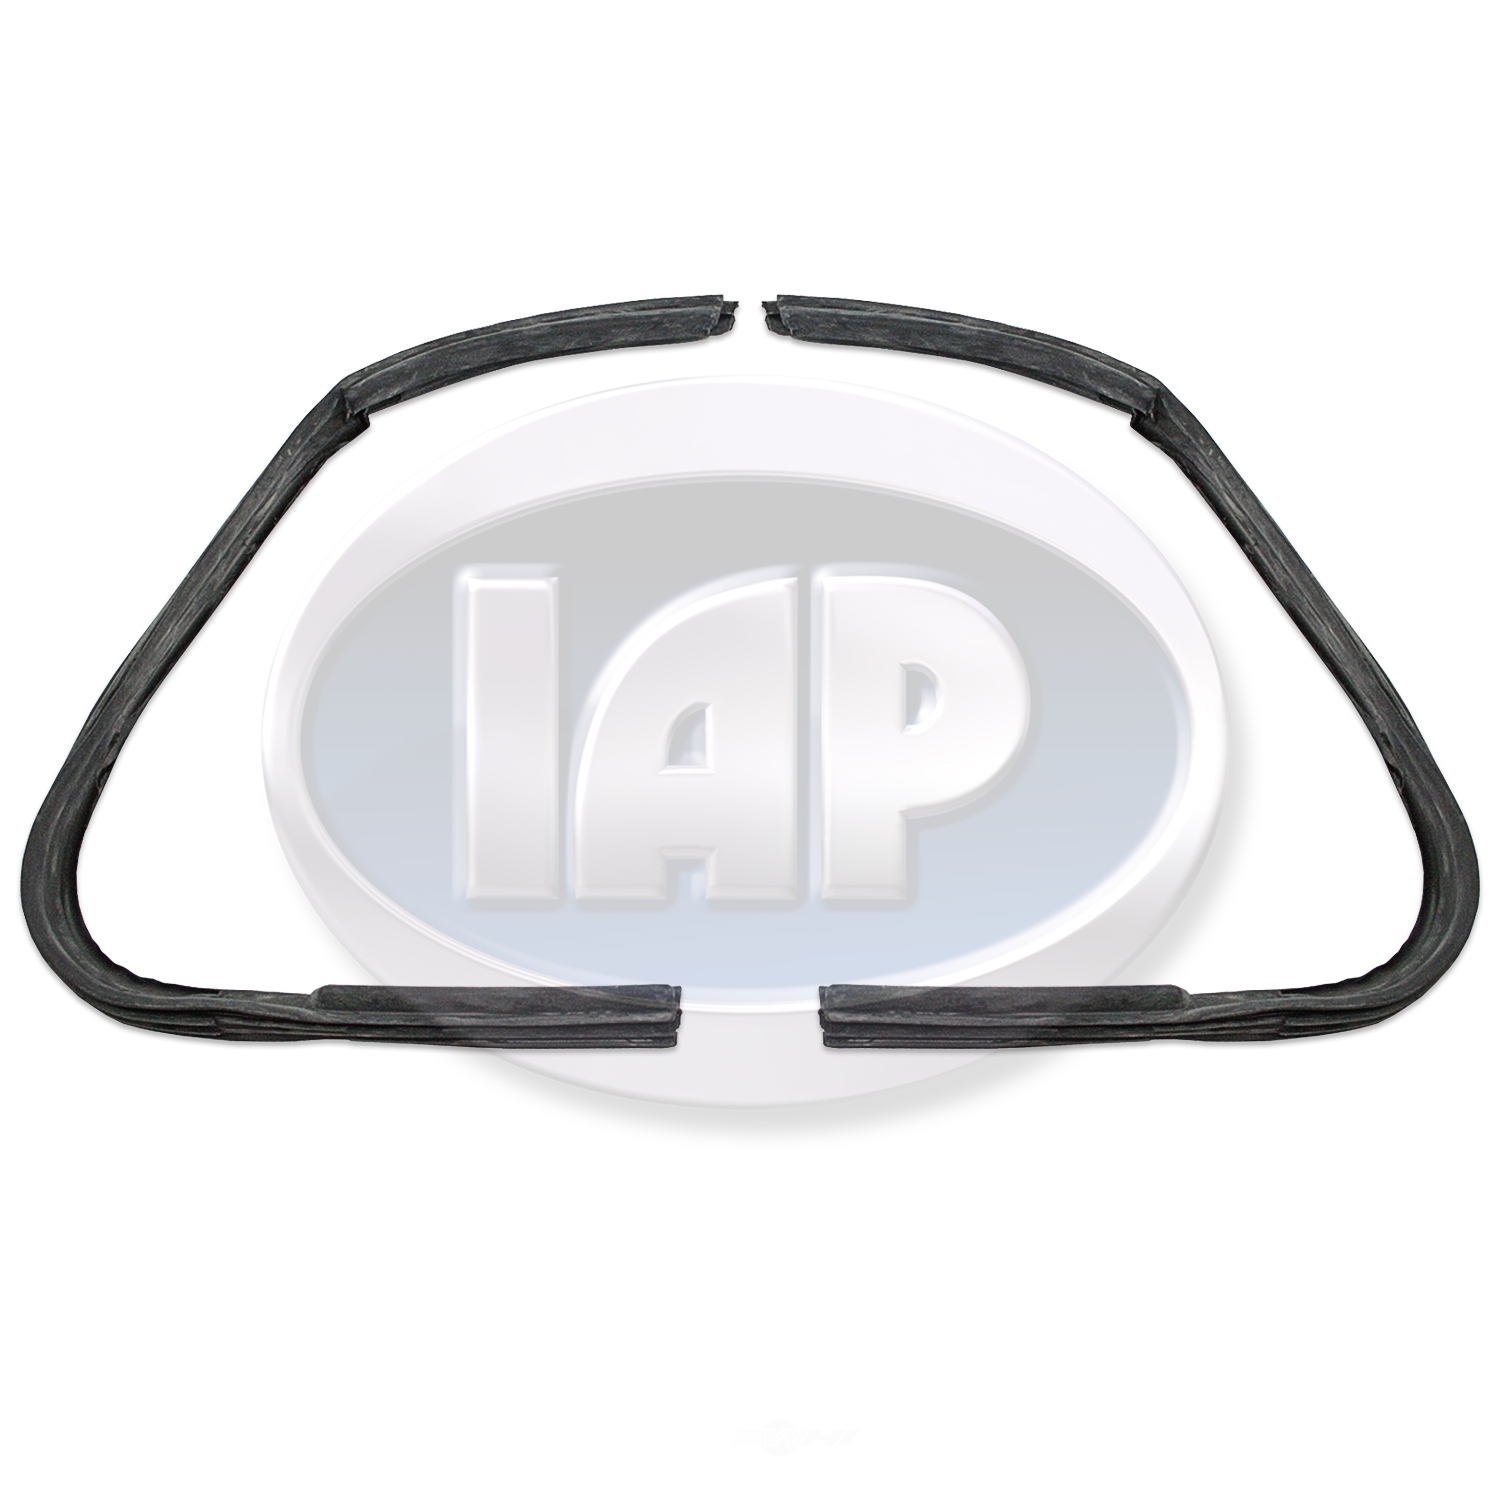 IAP/KUHLTEK MOTORWERKS - Vent Window Weatherstrip - KMS AC837625BK